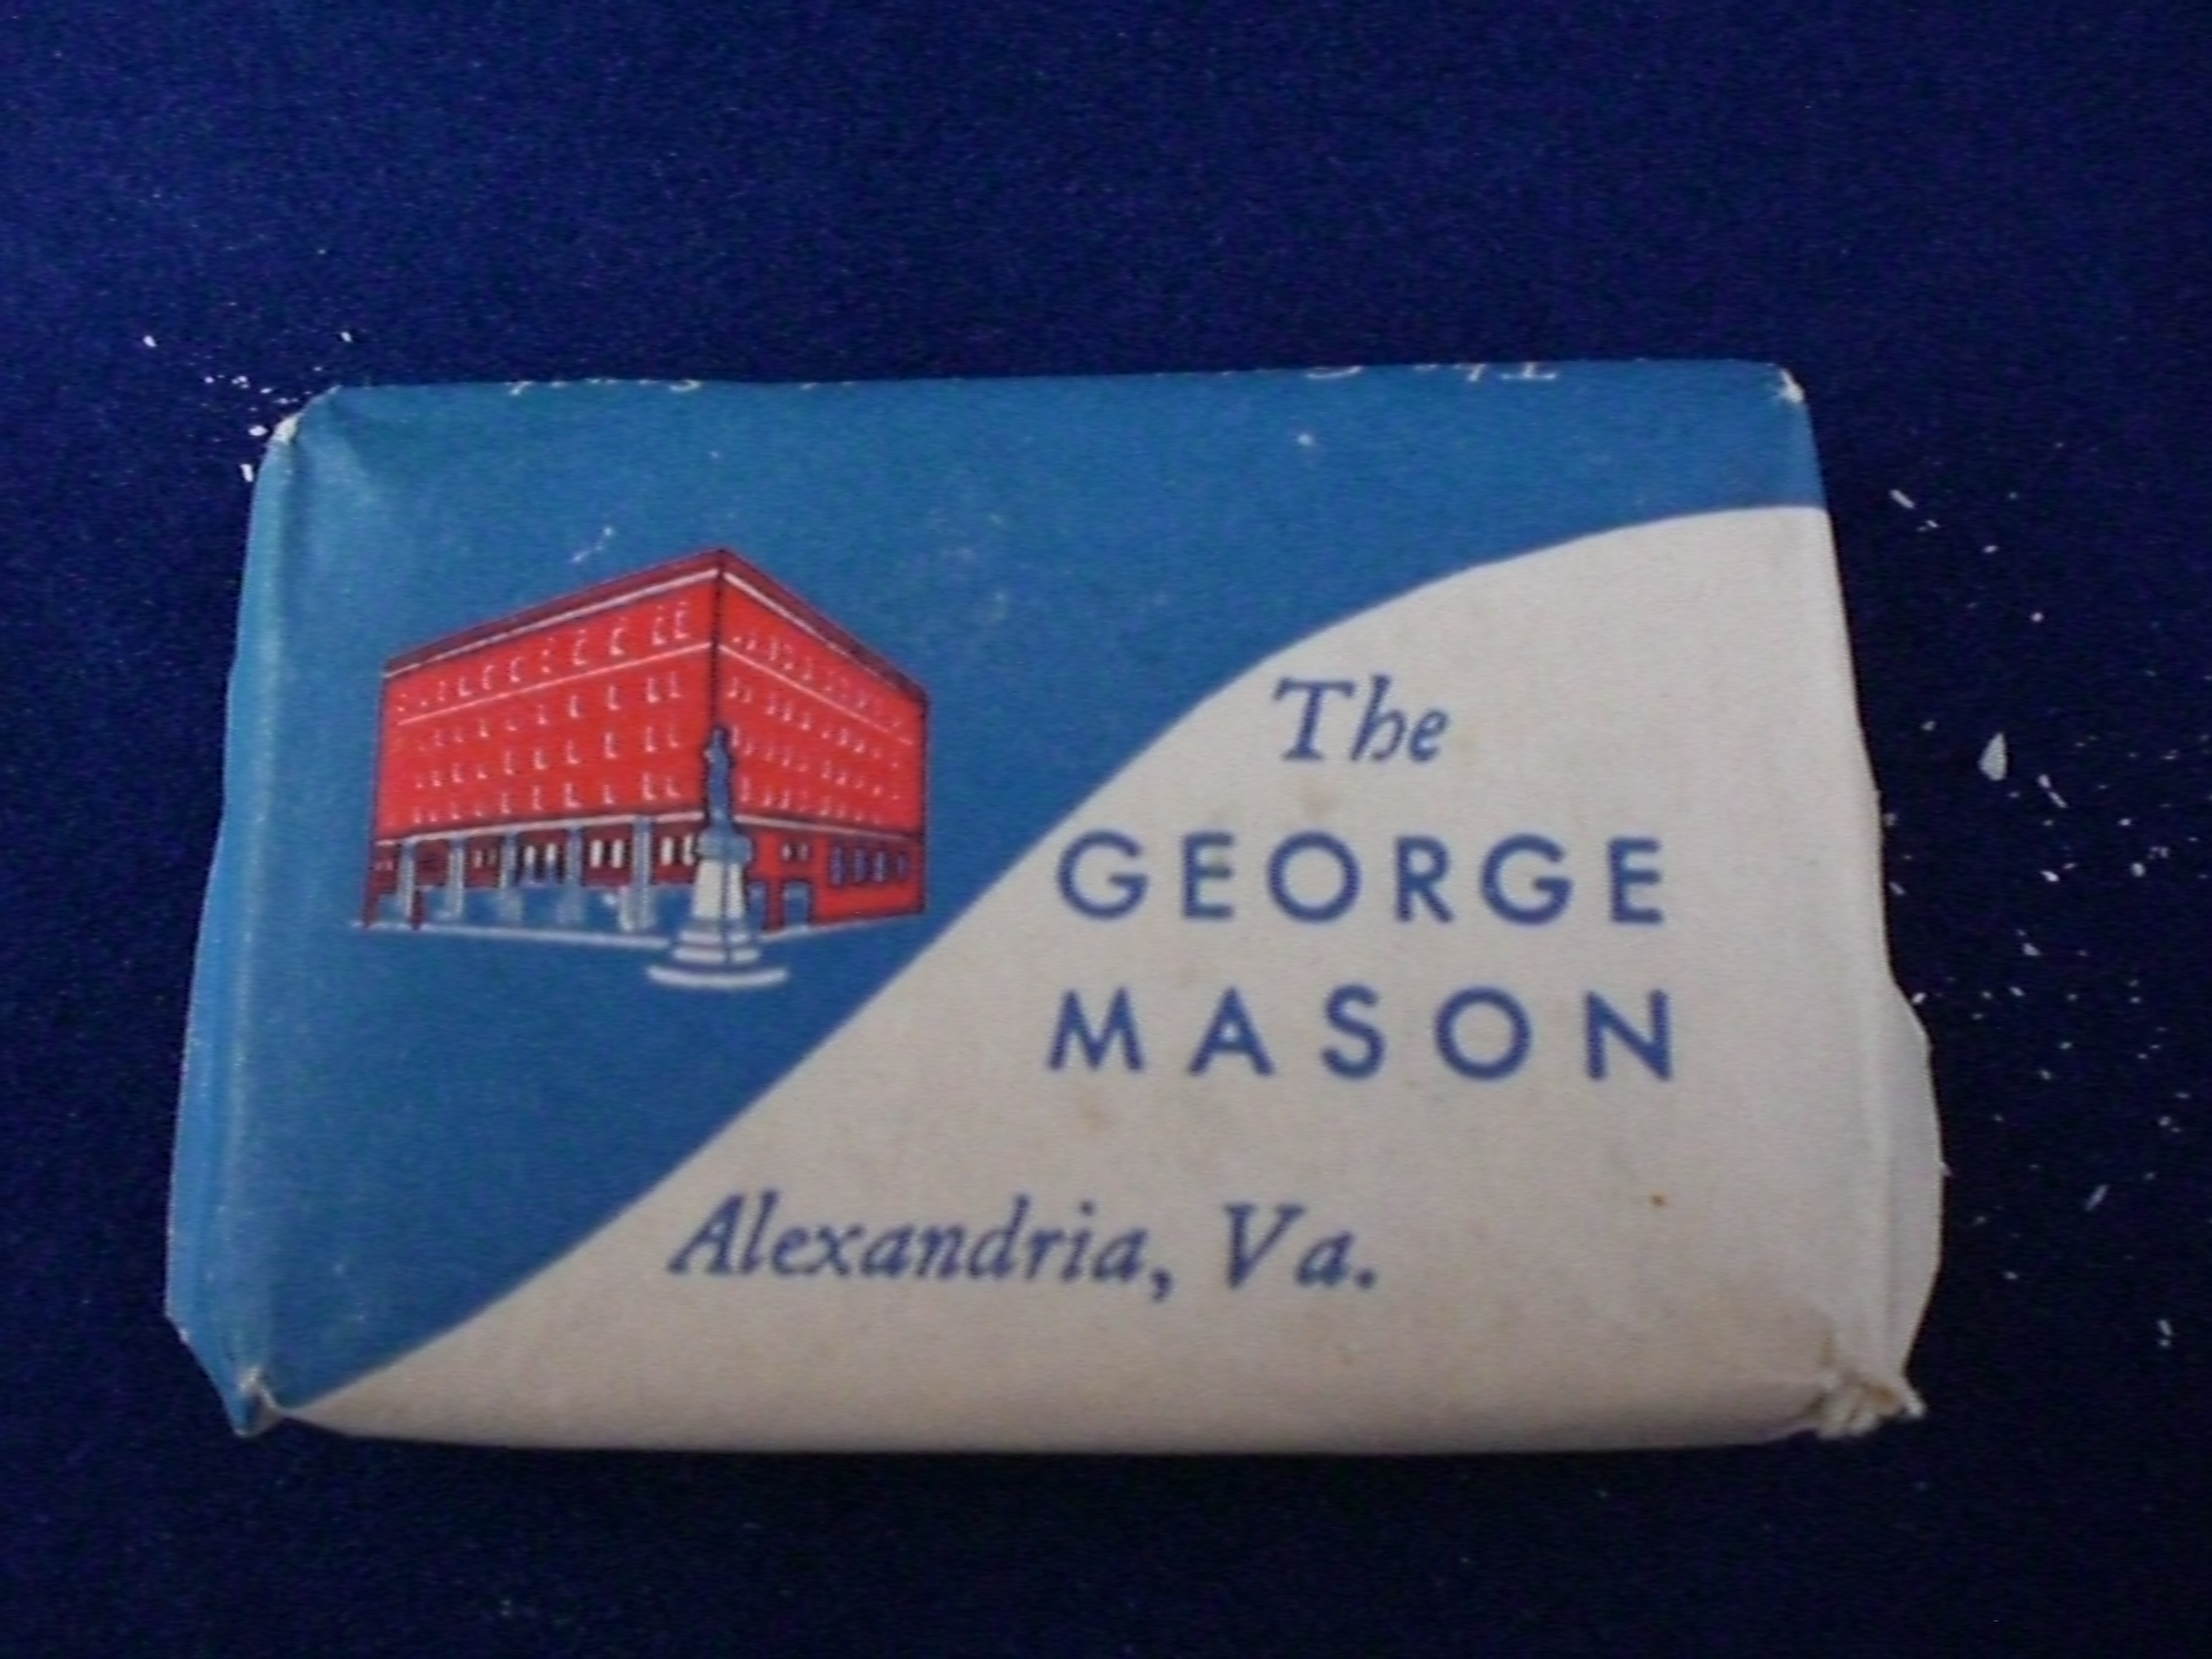 George Mason hotel Alexandria Virginia